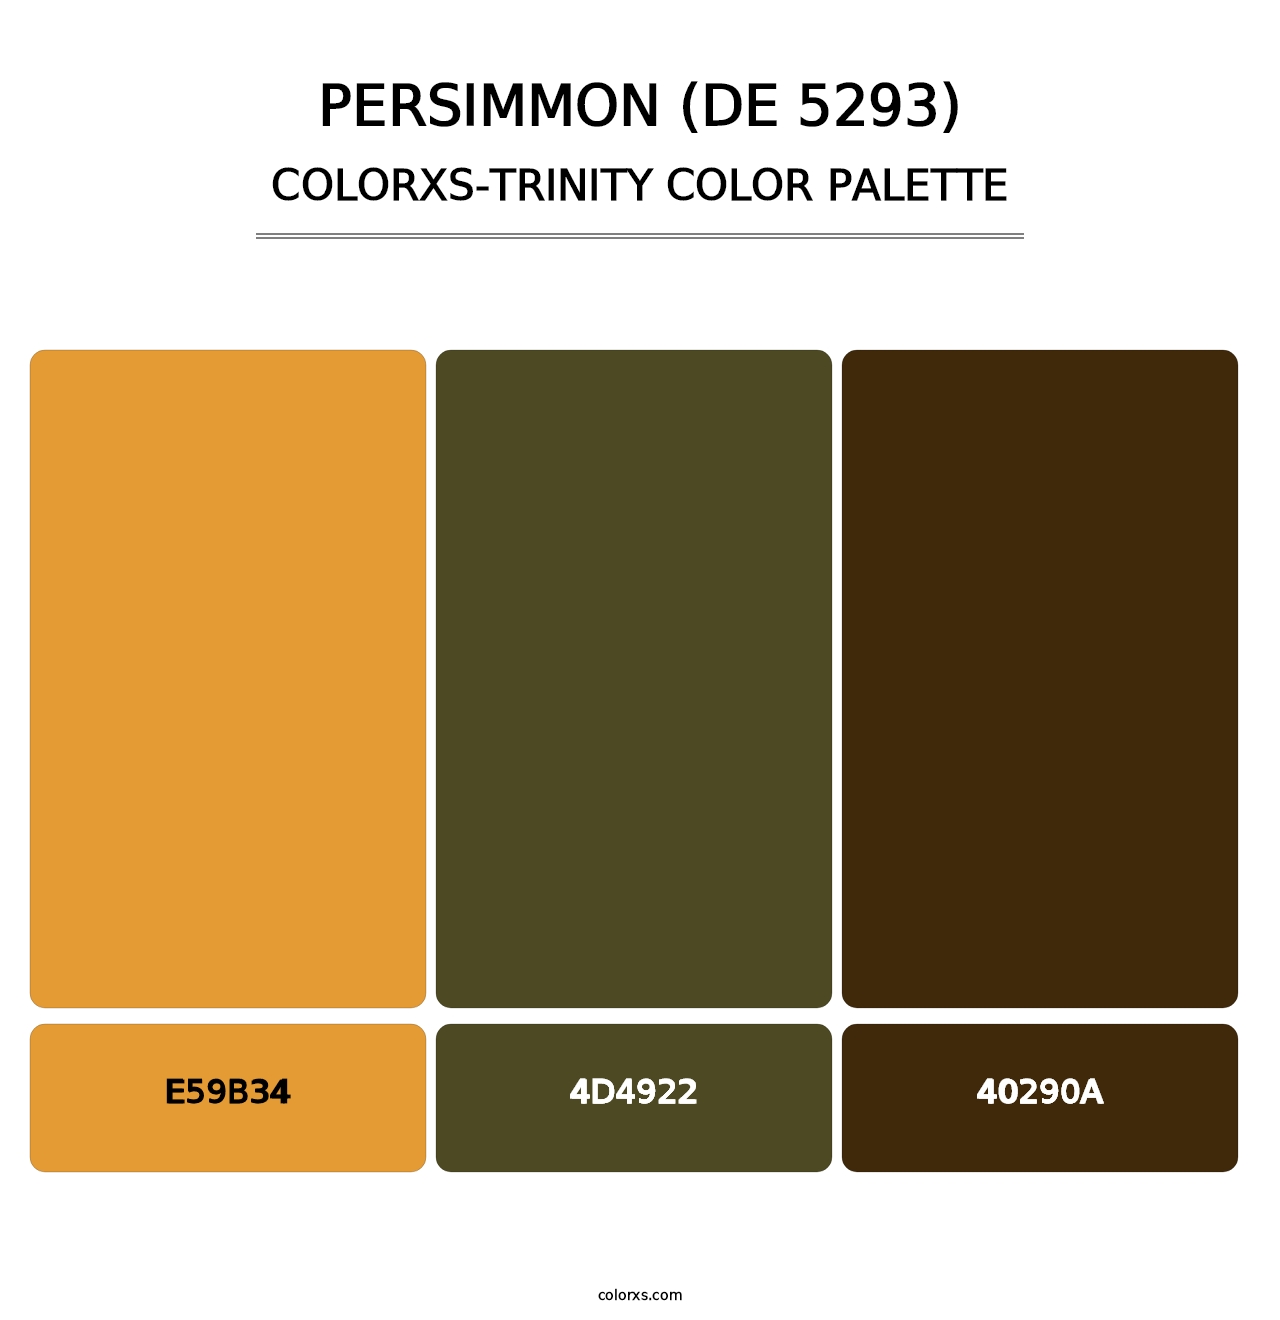 Persimmon (DE 5293) - Colorxs Trinity Palette